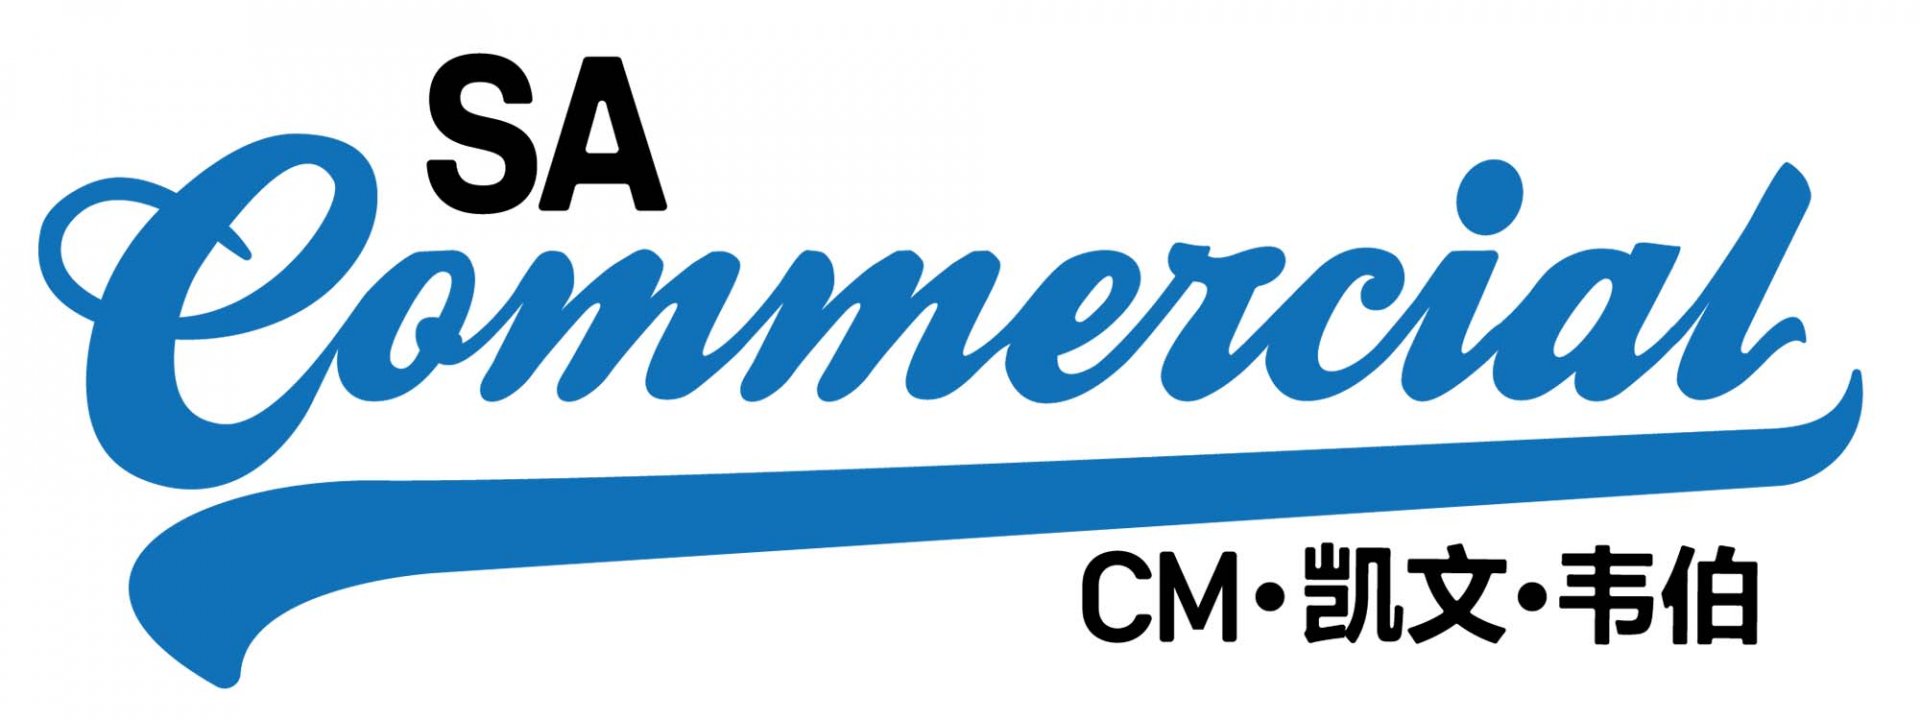 Sa Commercial   Ballpark Logo V2 (png) (1)